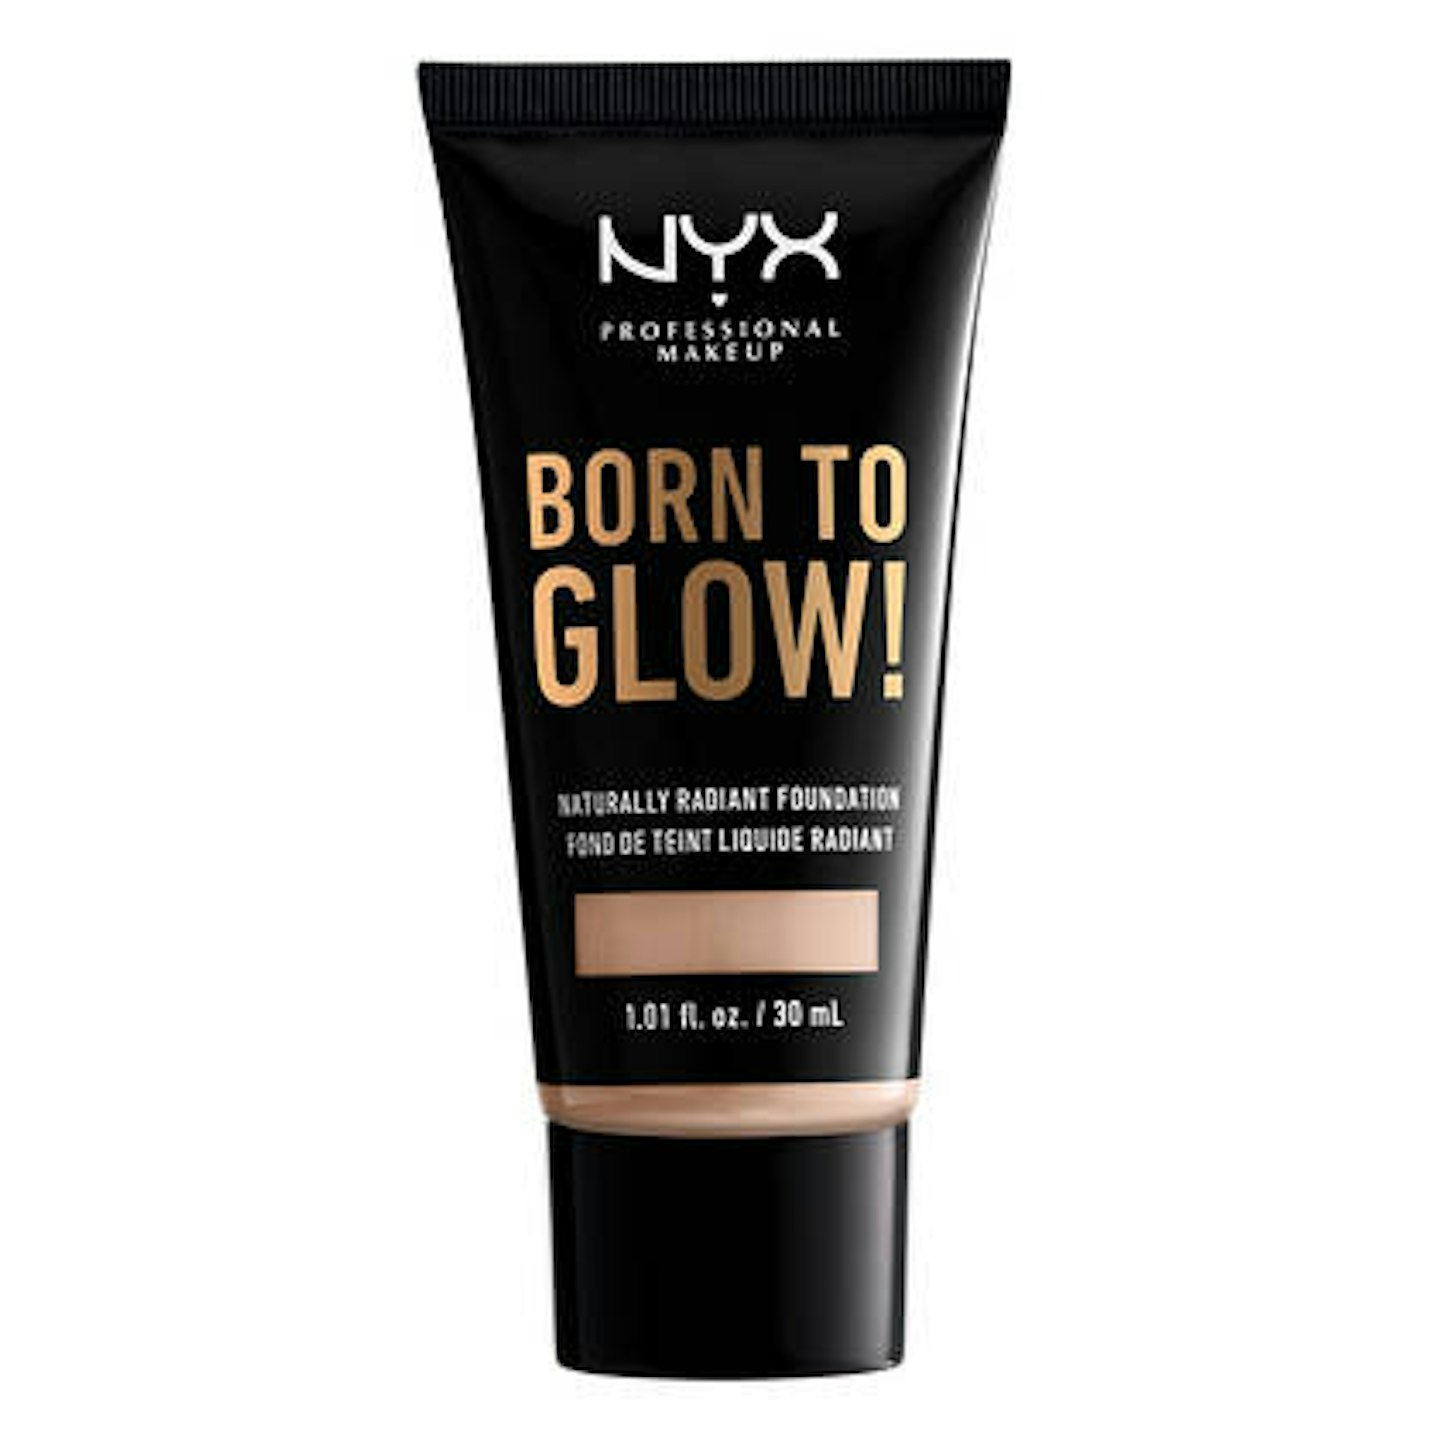 NYX Cosmetics Born To Glow! Naturally Radiant Foundation, £10